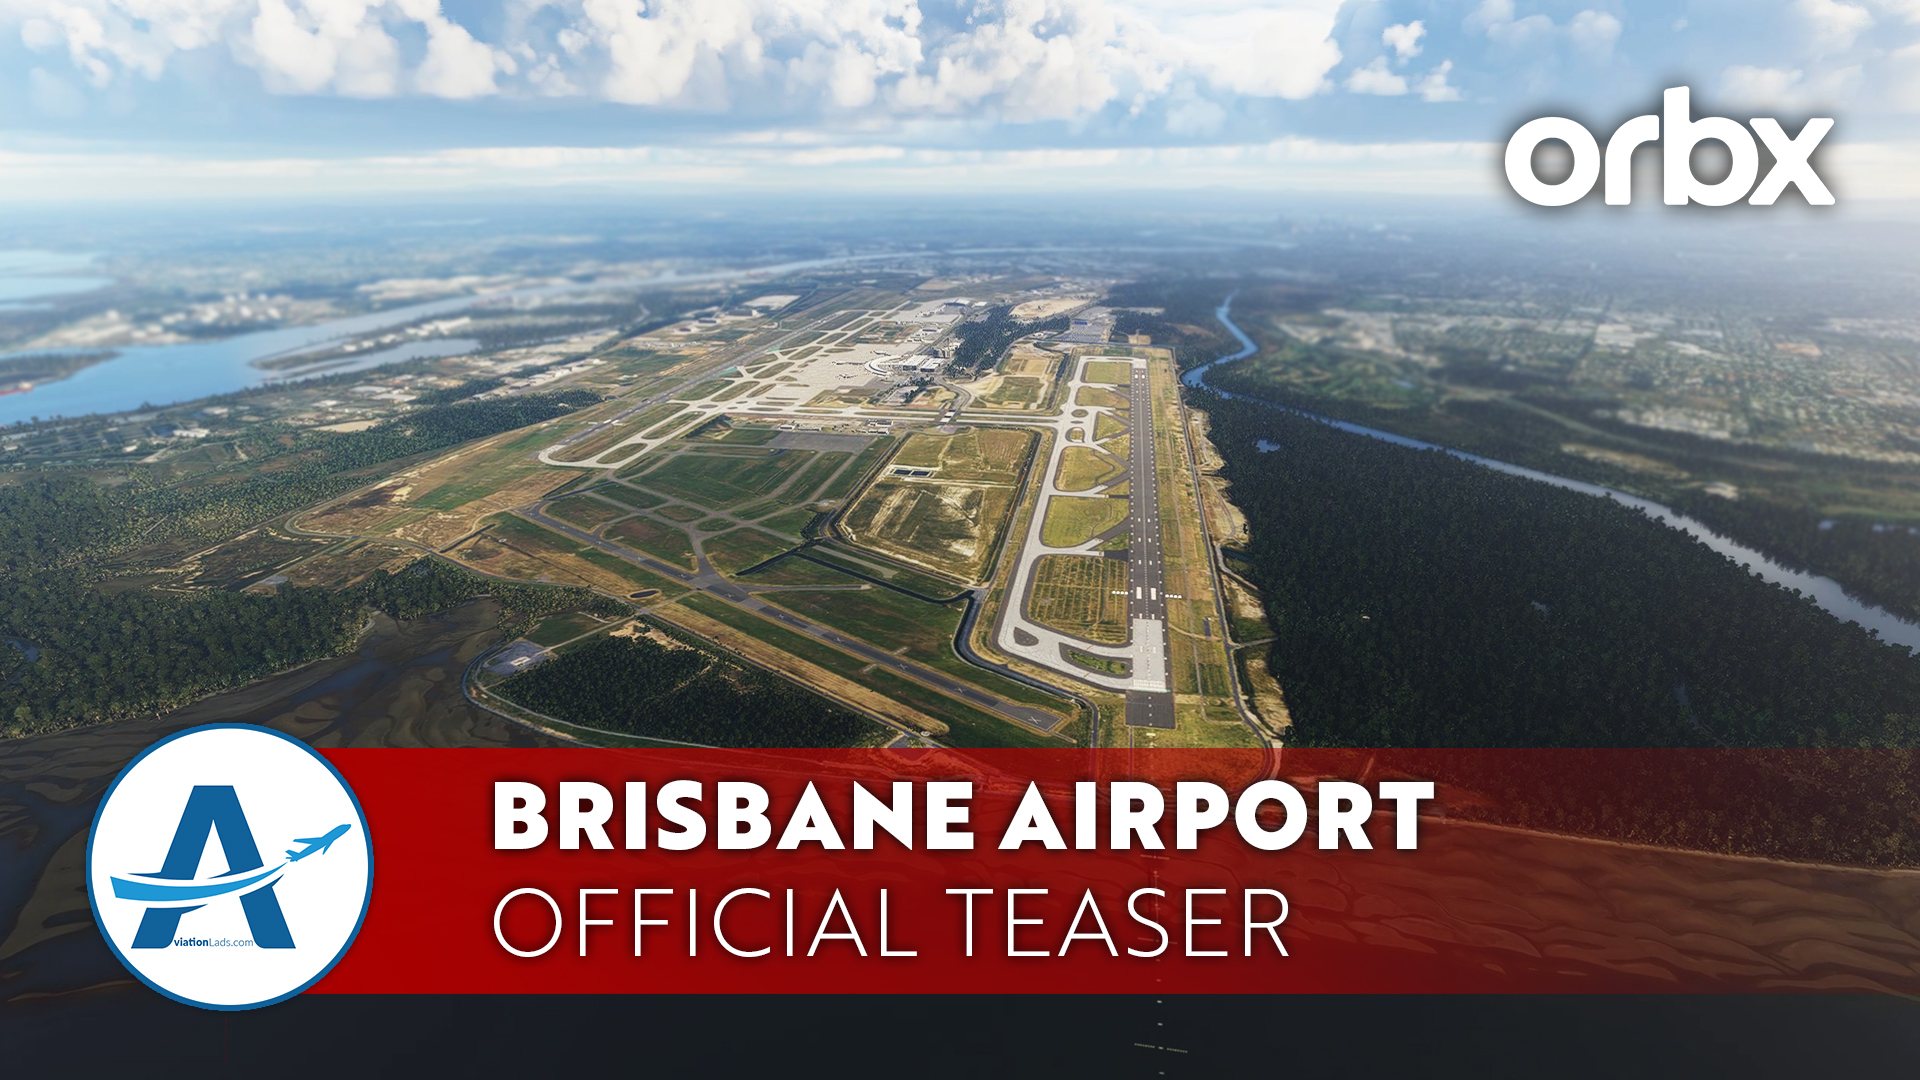 [TEASER] Orbx Brisbane Airport